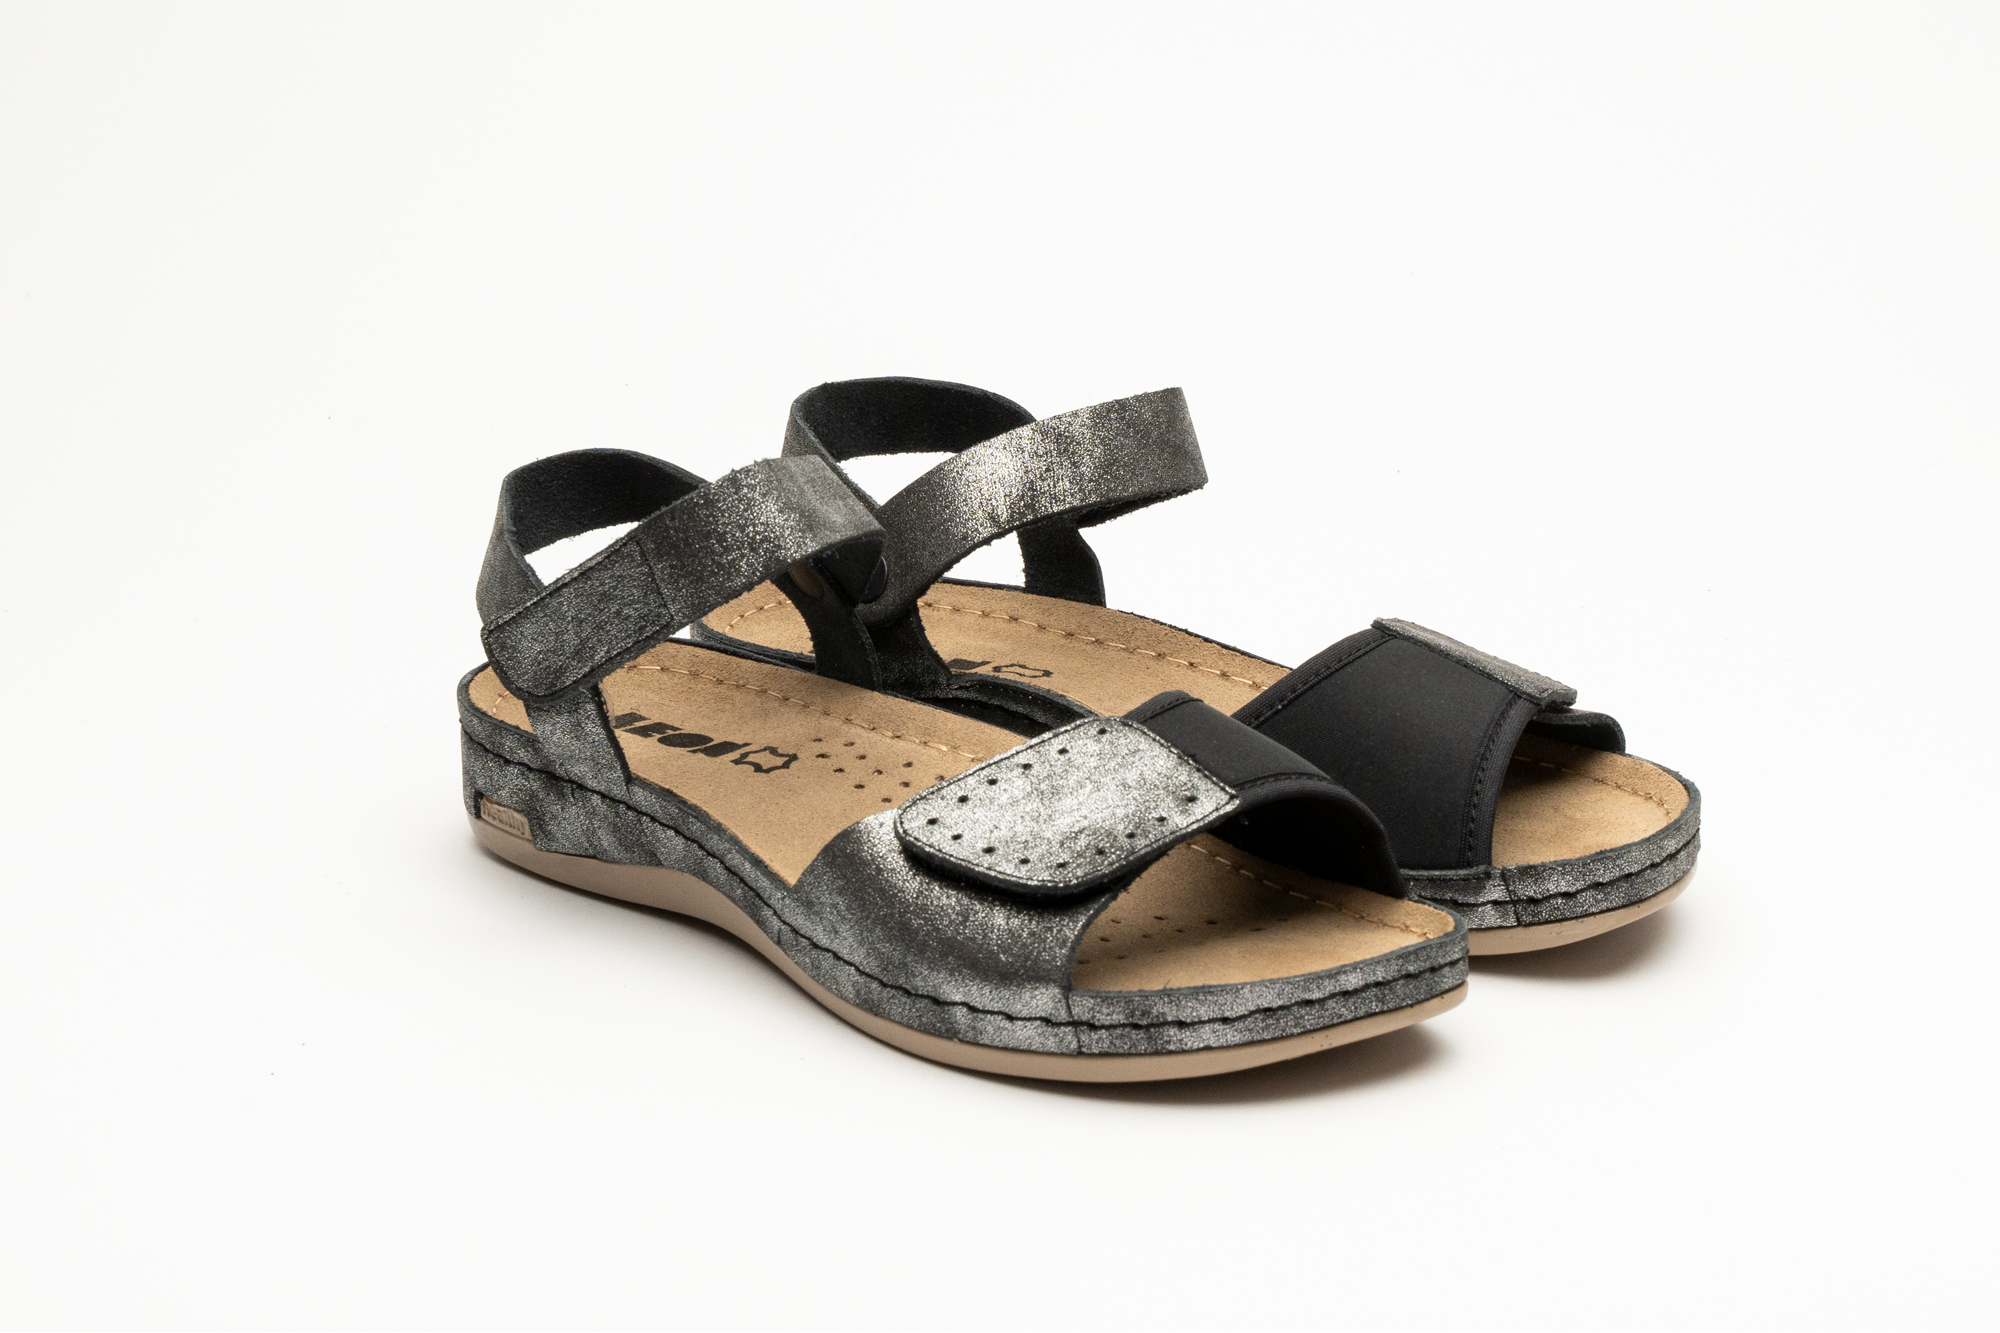 Dámské halluxové sandále Leons Modex - Černá lesk